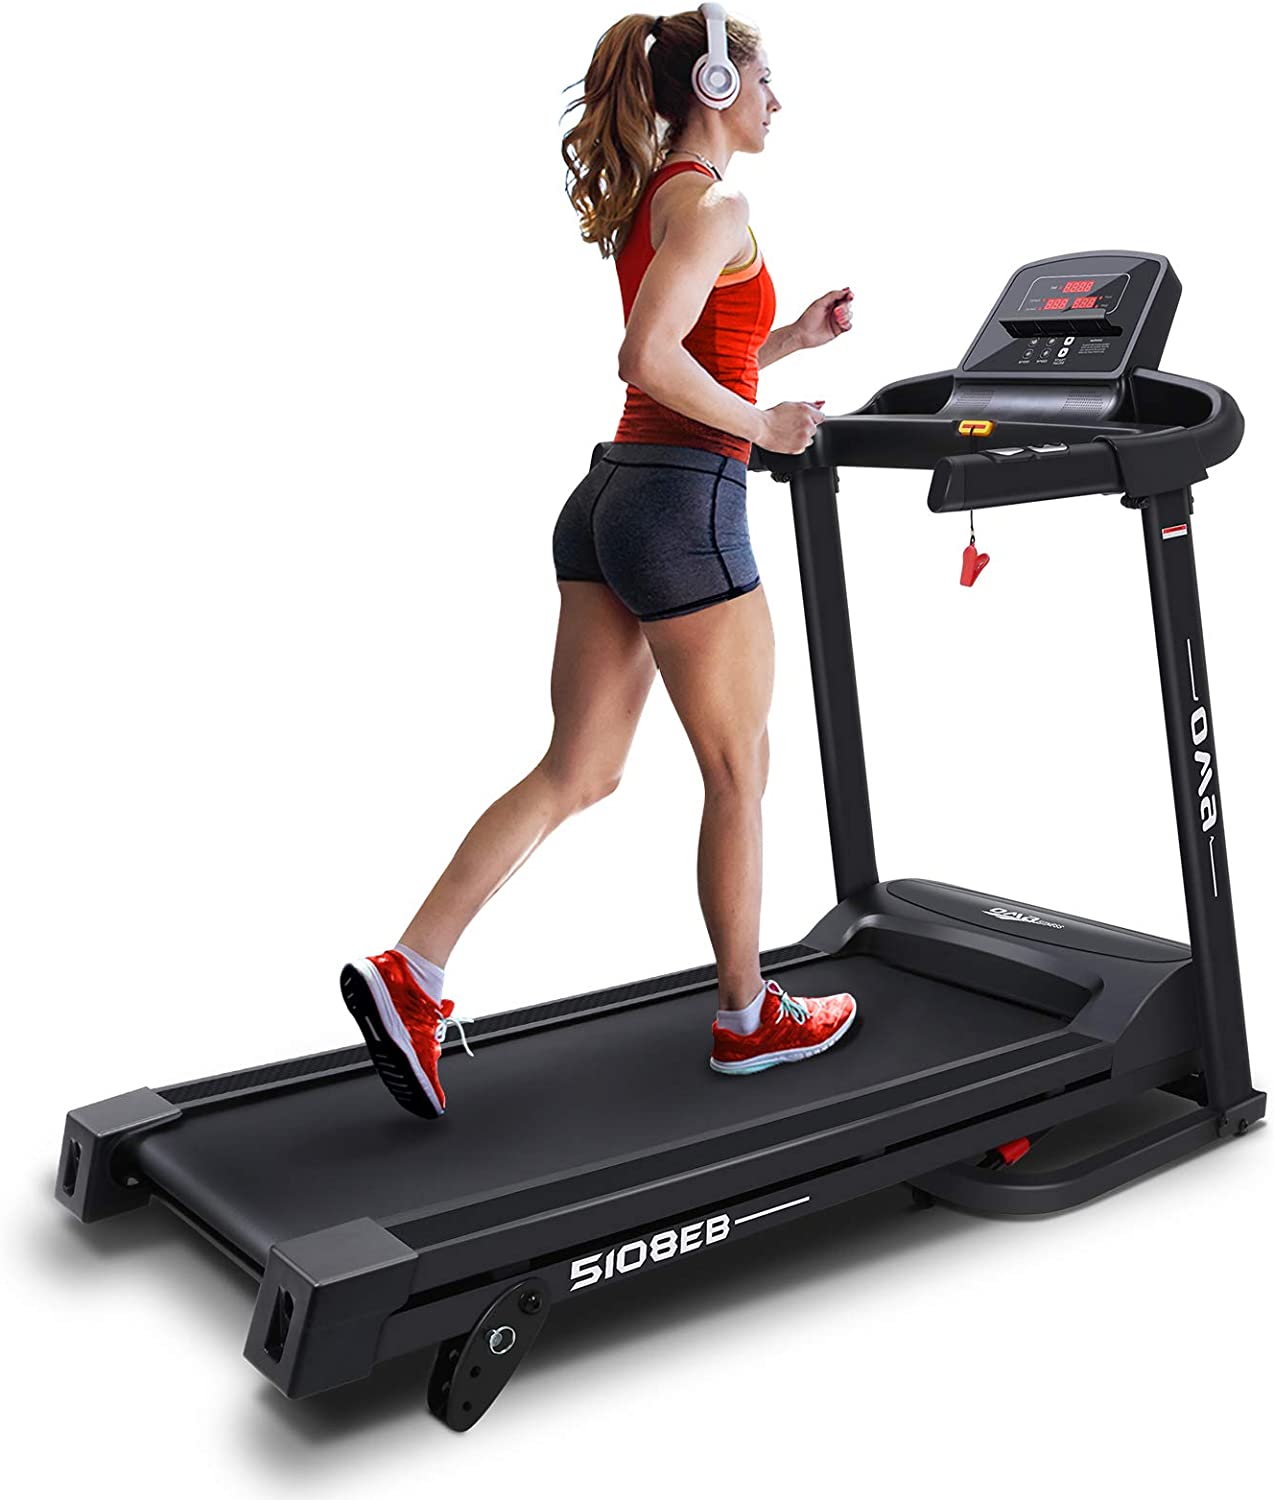 OMA Treadmill for Home 5108EB